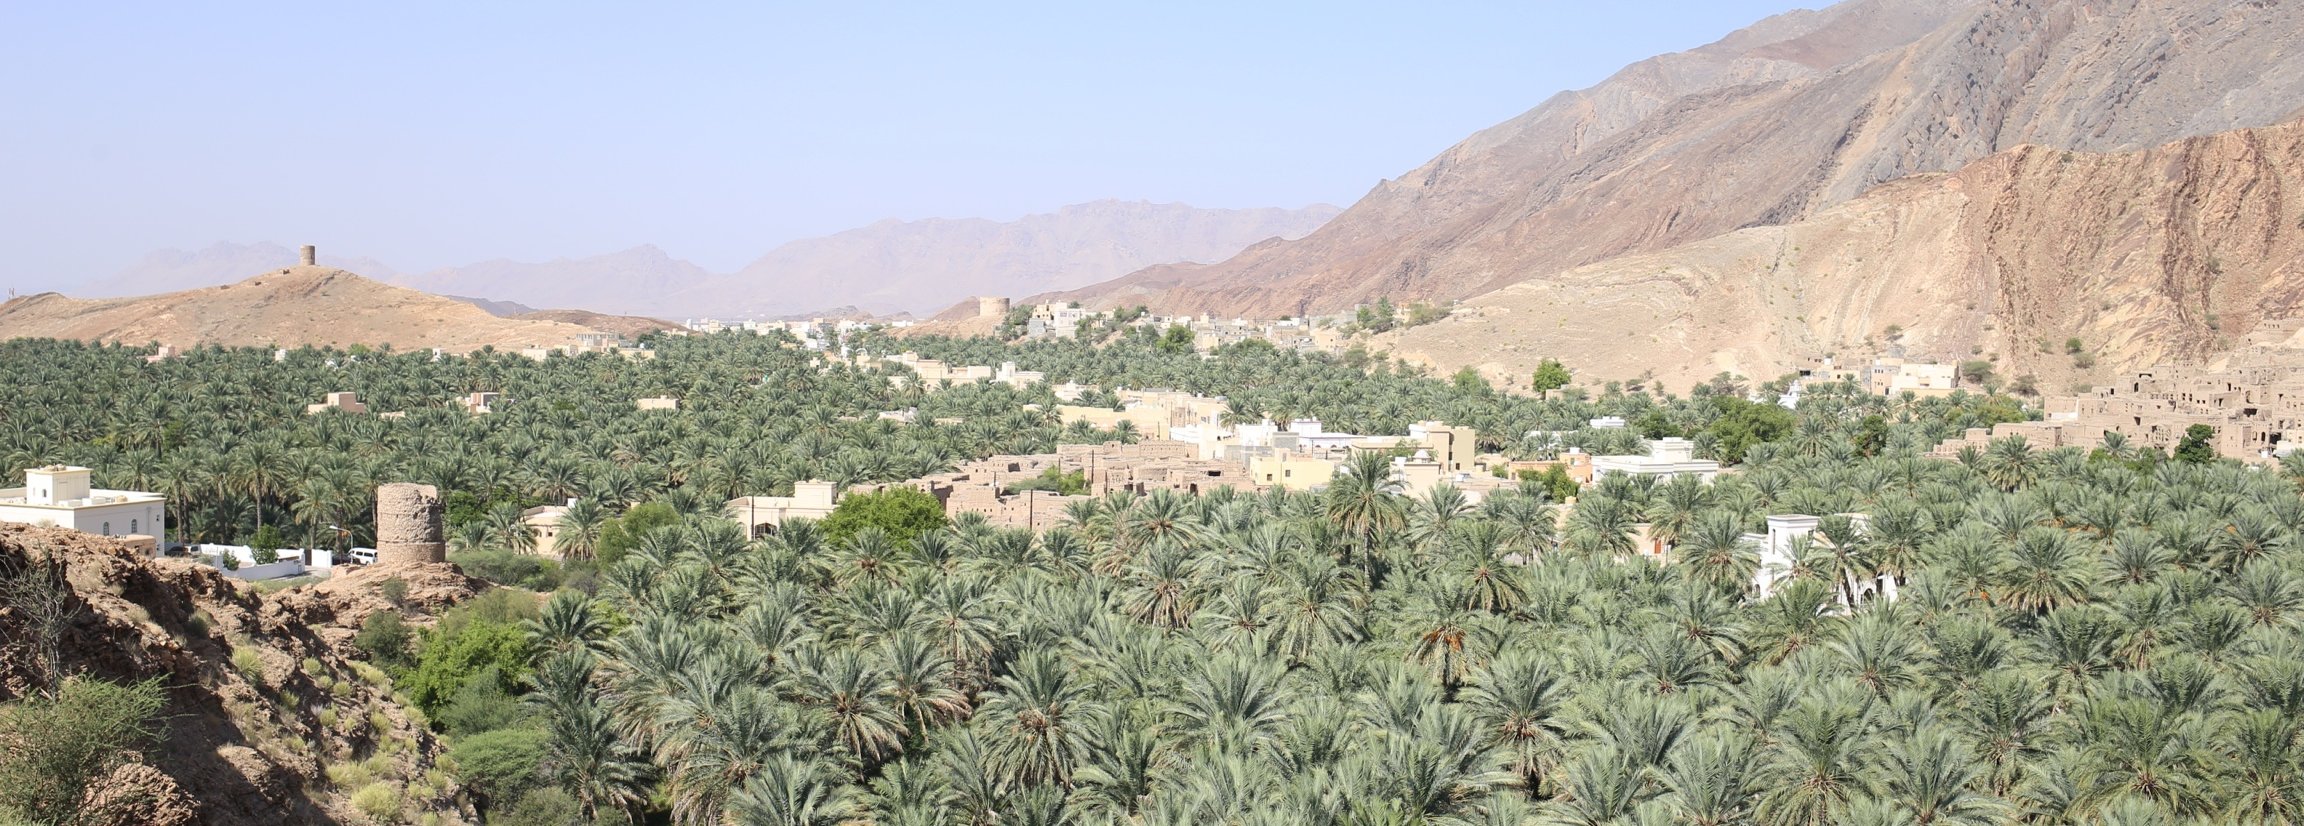 Oman mit Kindern - Oman for family - Trockene Berglandschaft